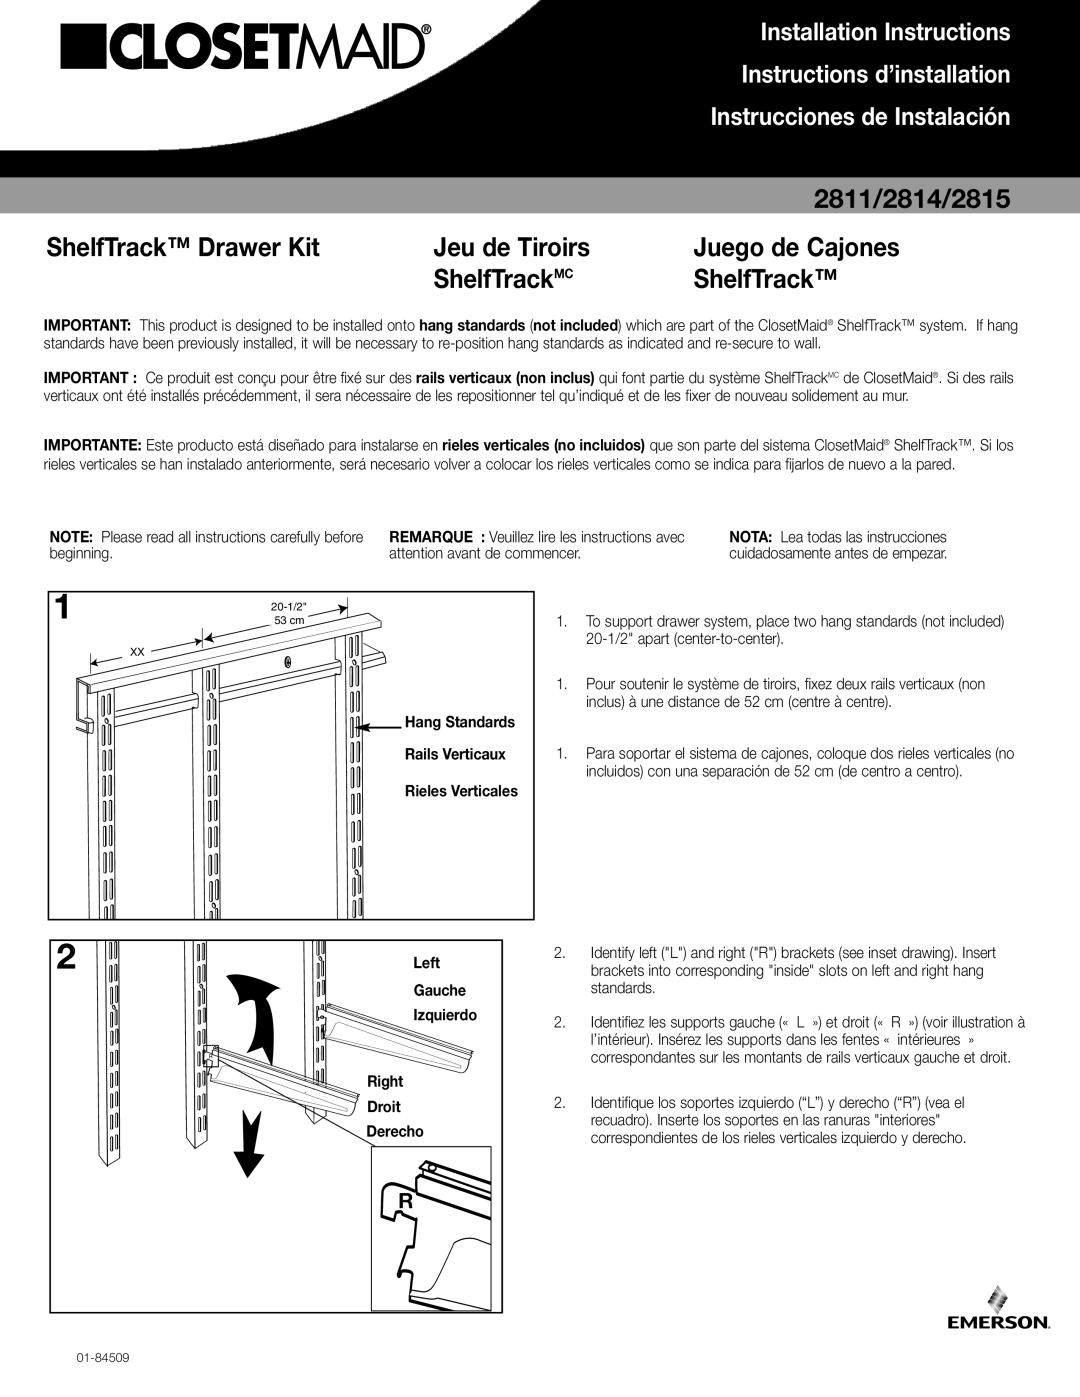 Closet Maid 2811 installation instructions Hang Standards Rails Verticaux Rieles Verticales, Left, Gauche, Right, Droit 